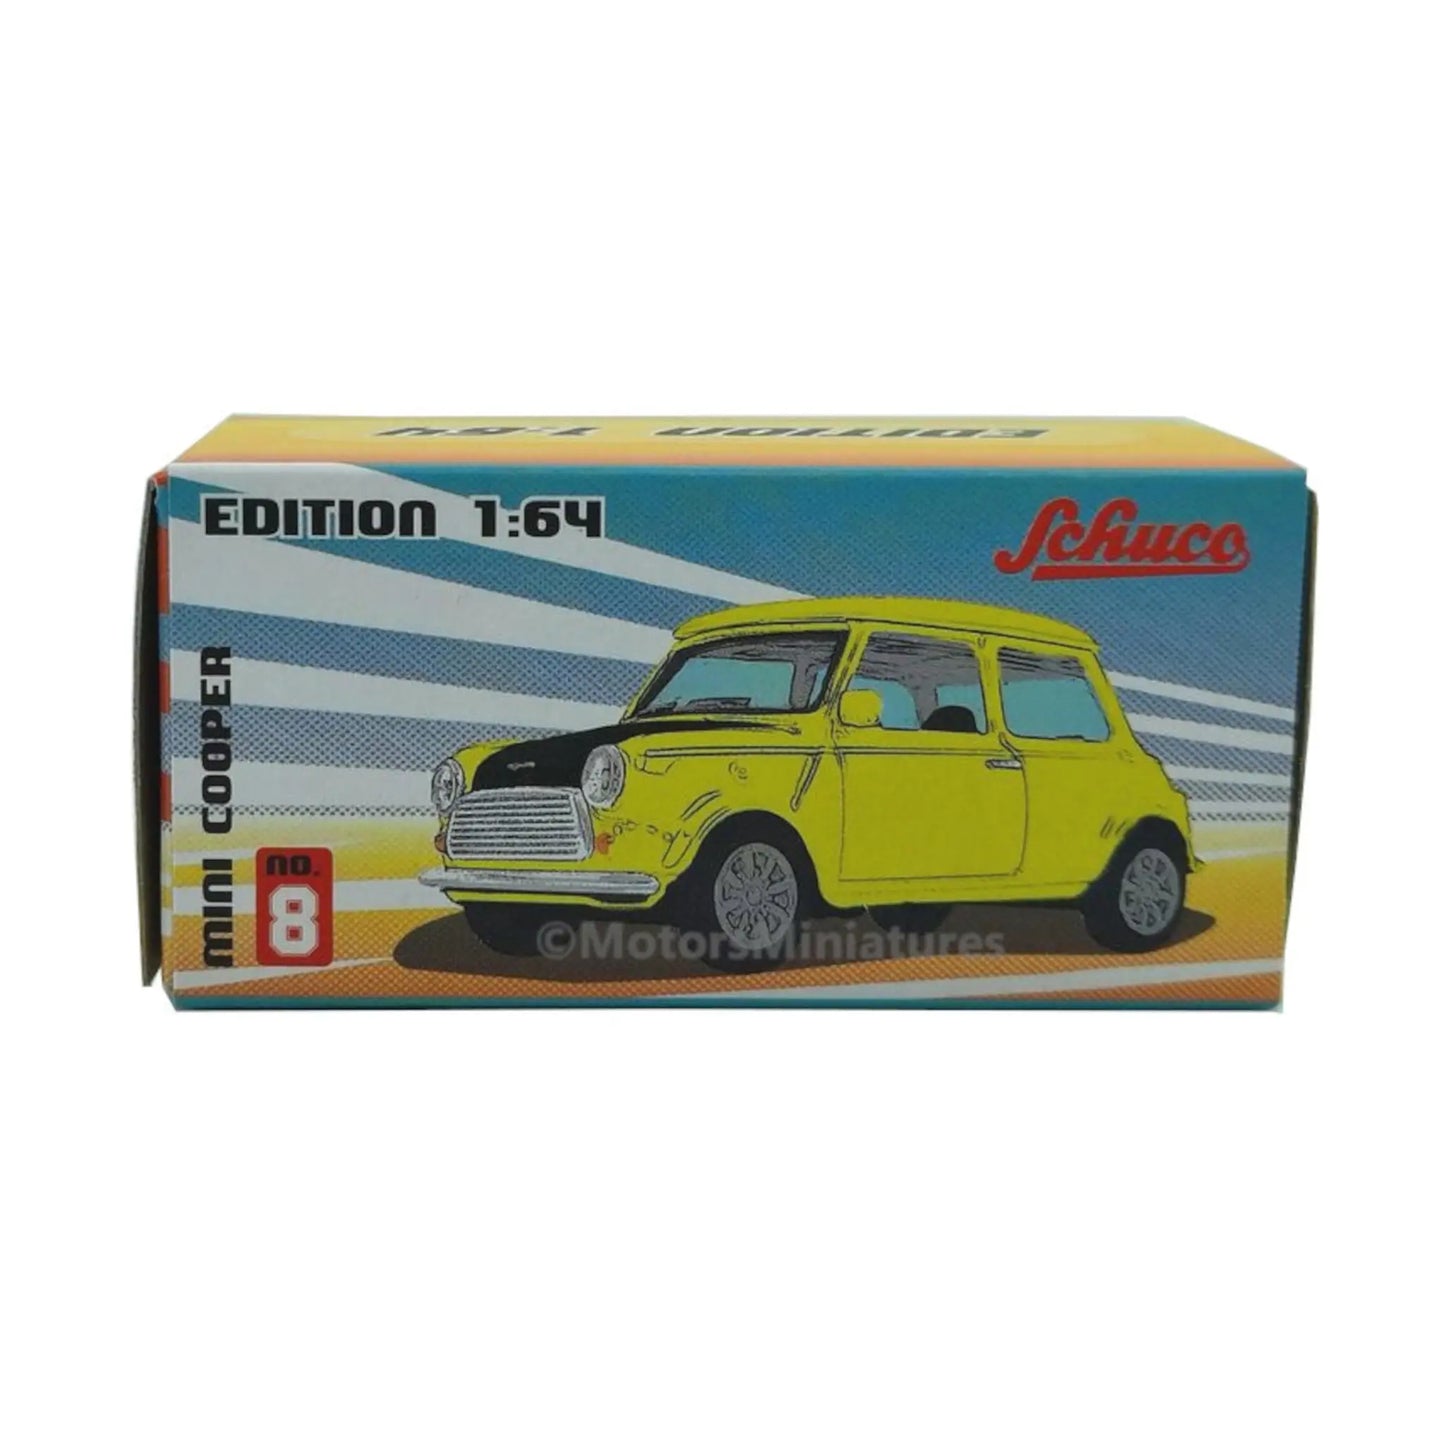 Mini Cooper Papier Edition Schuco 1/64 | Motors Miniatures